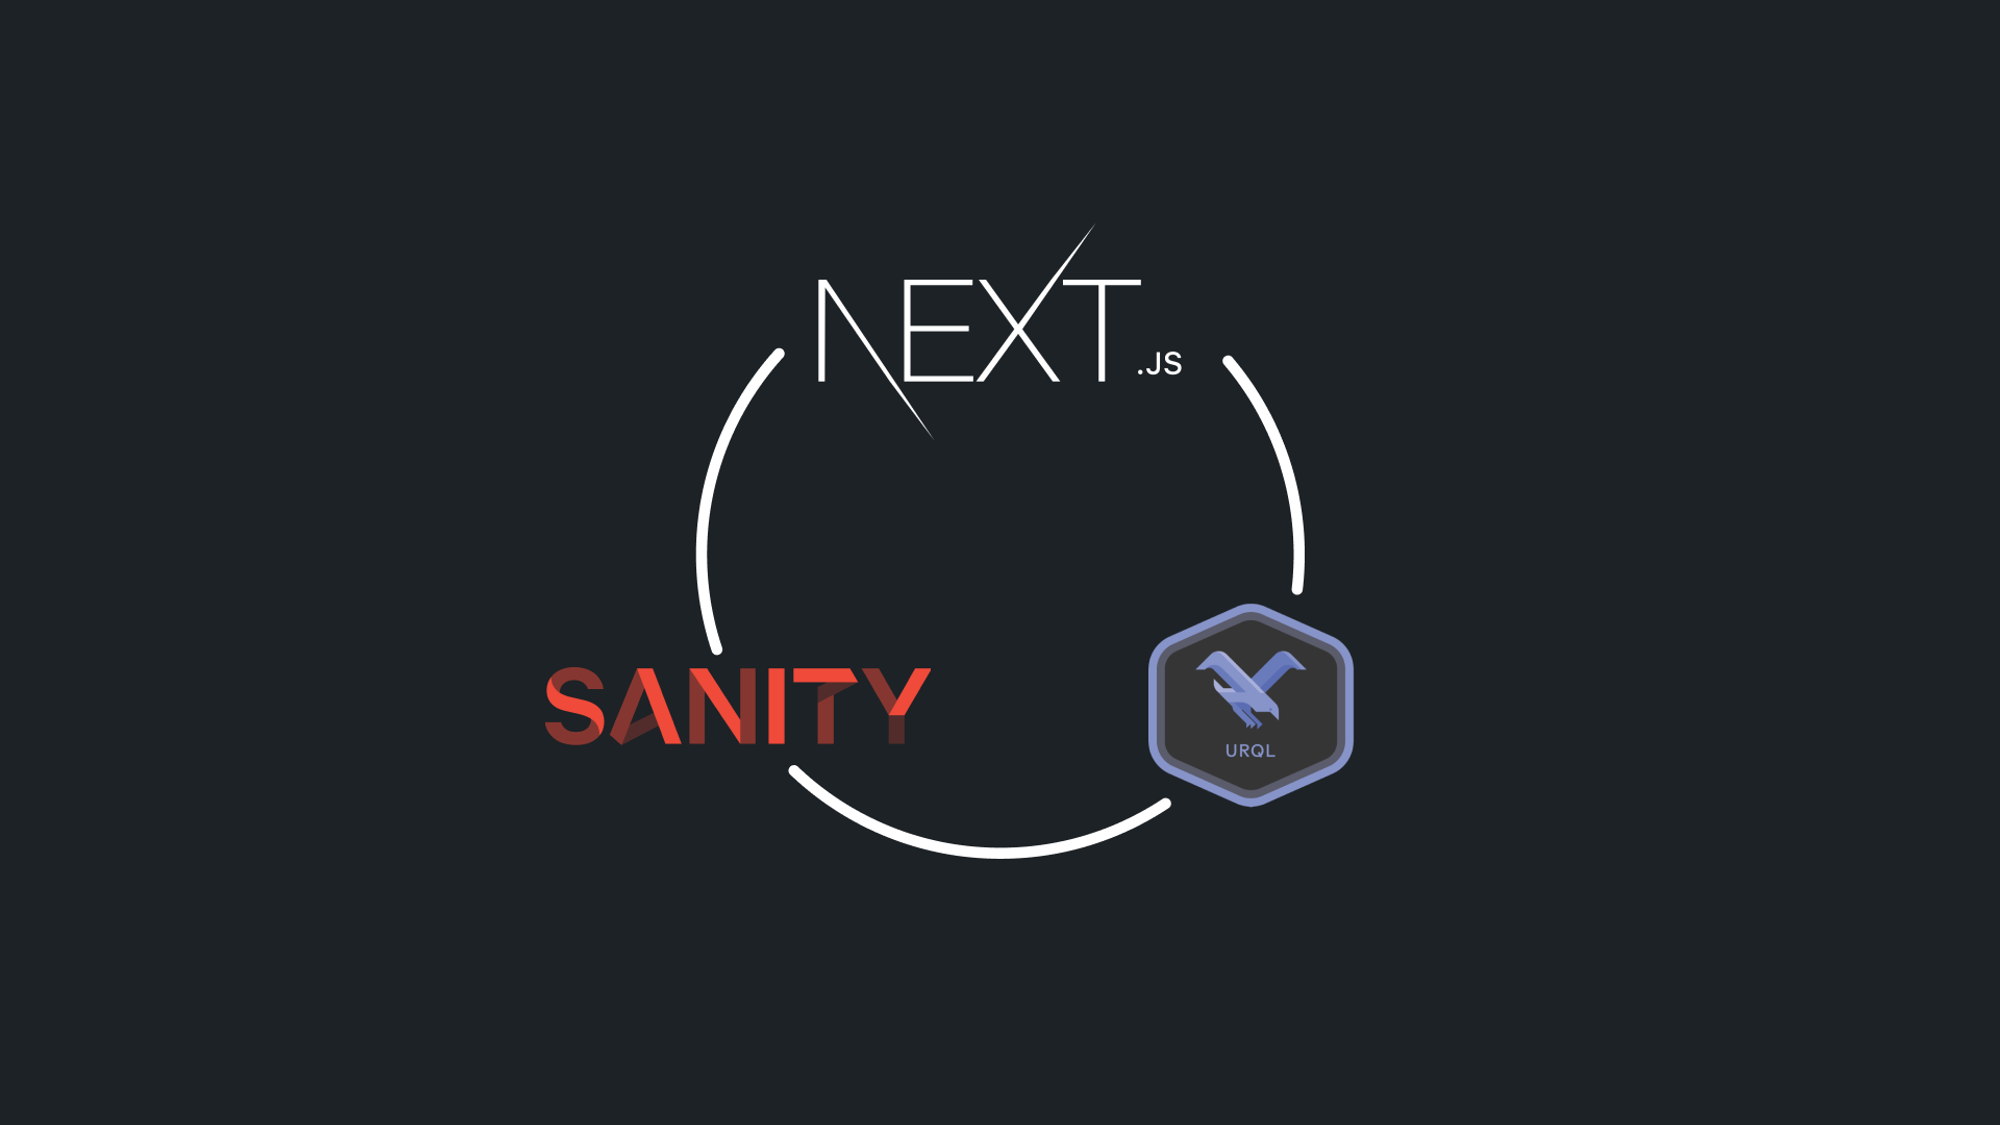 Urql with Next.js & Sanity